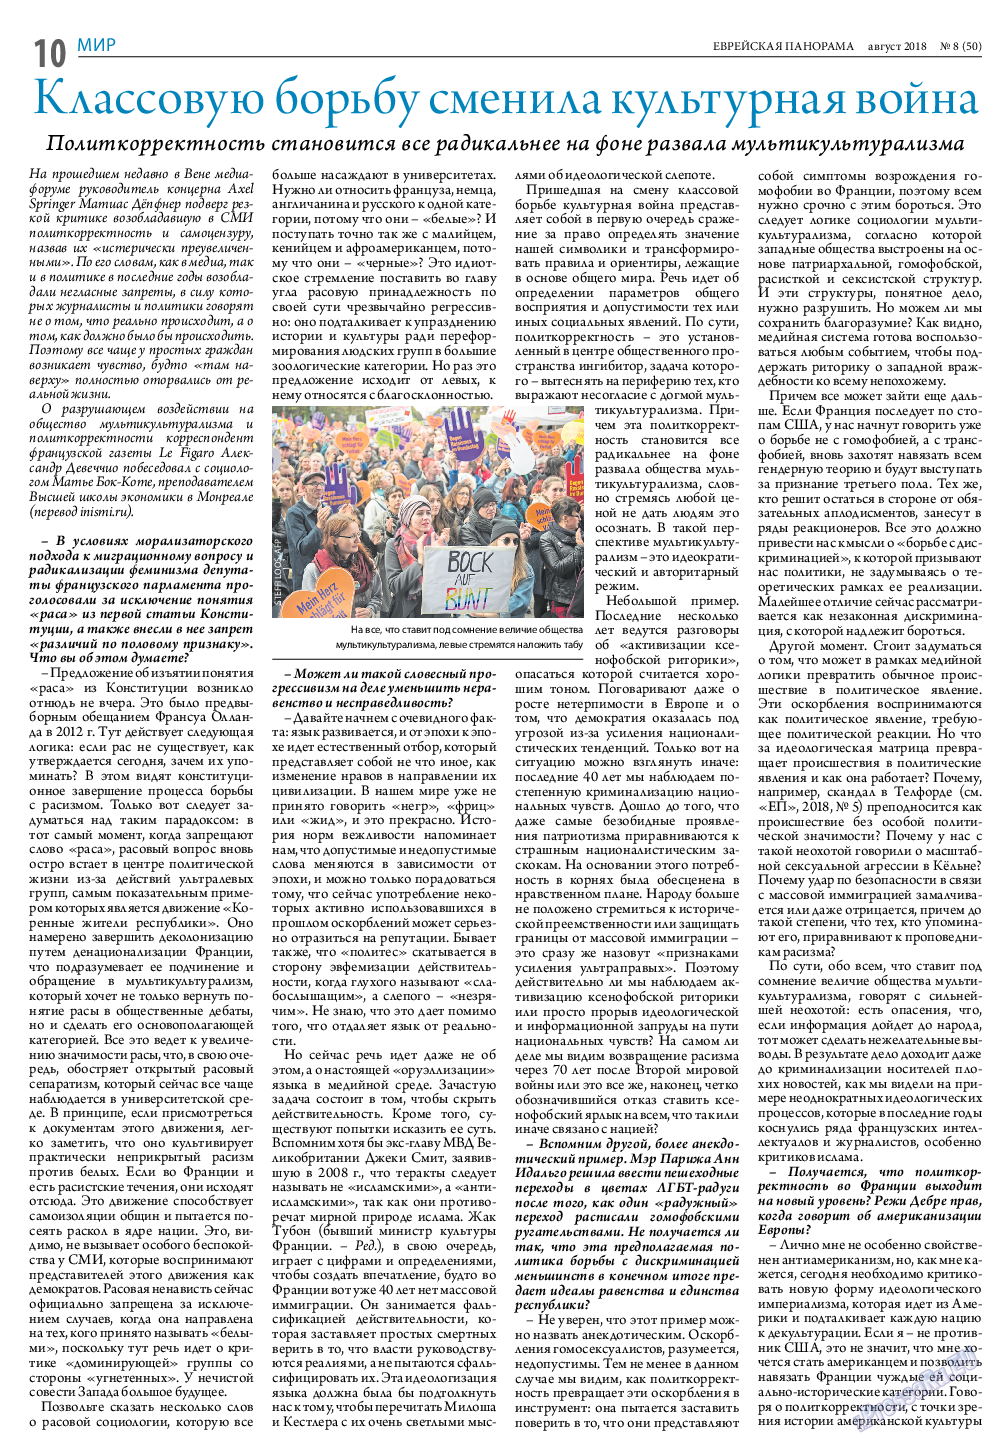 Еврейская панорама, газета. 2018 №8 стр.10